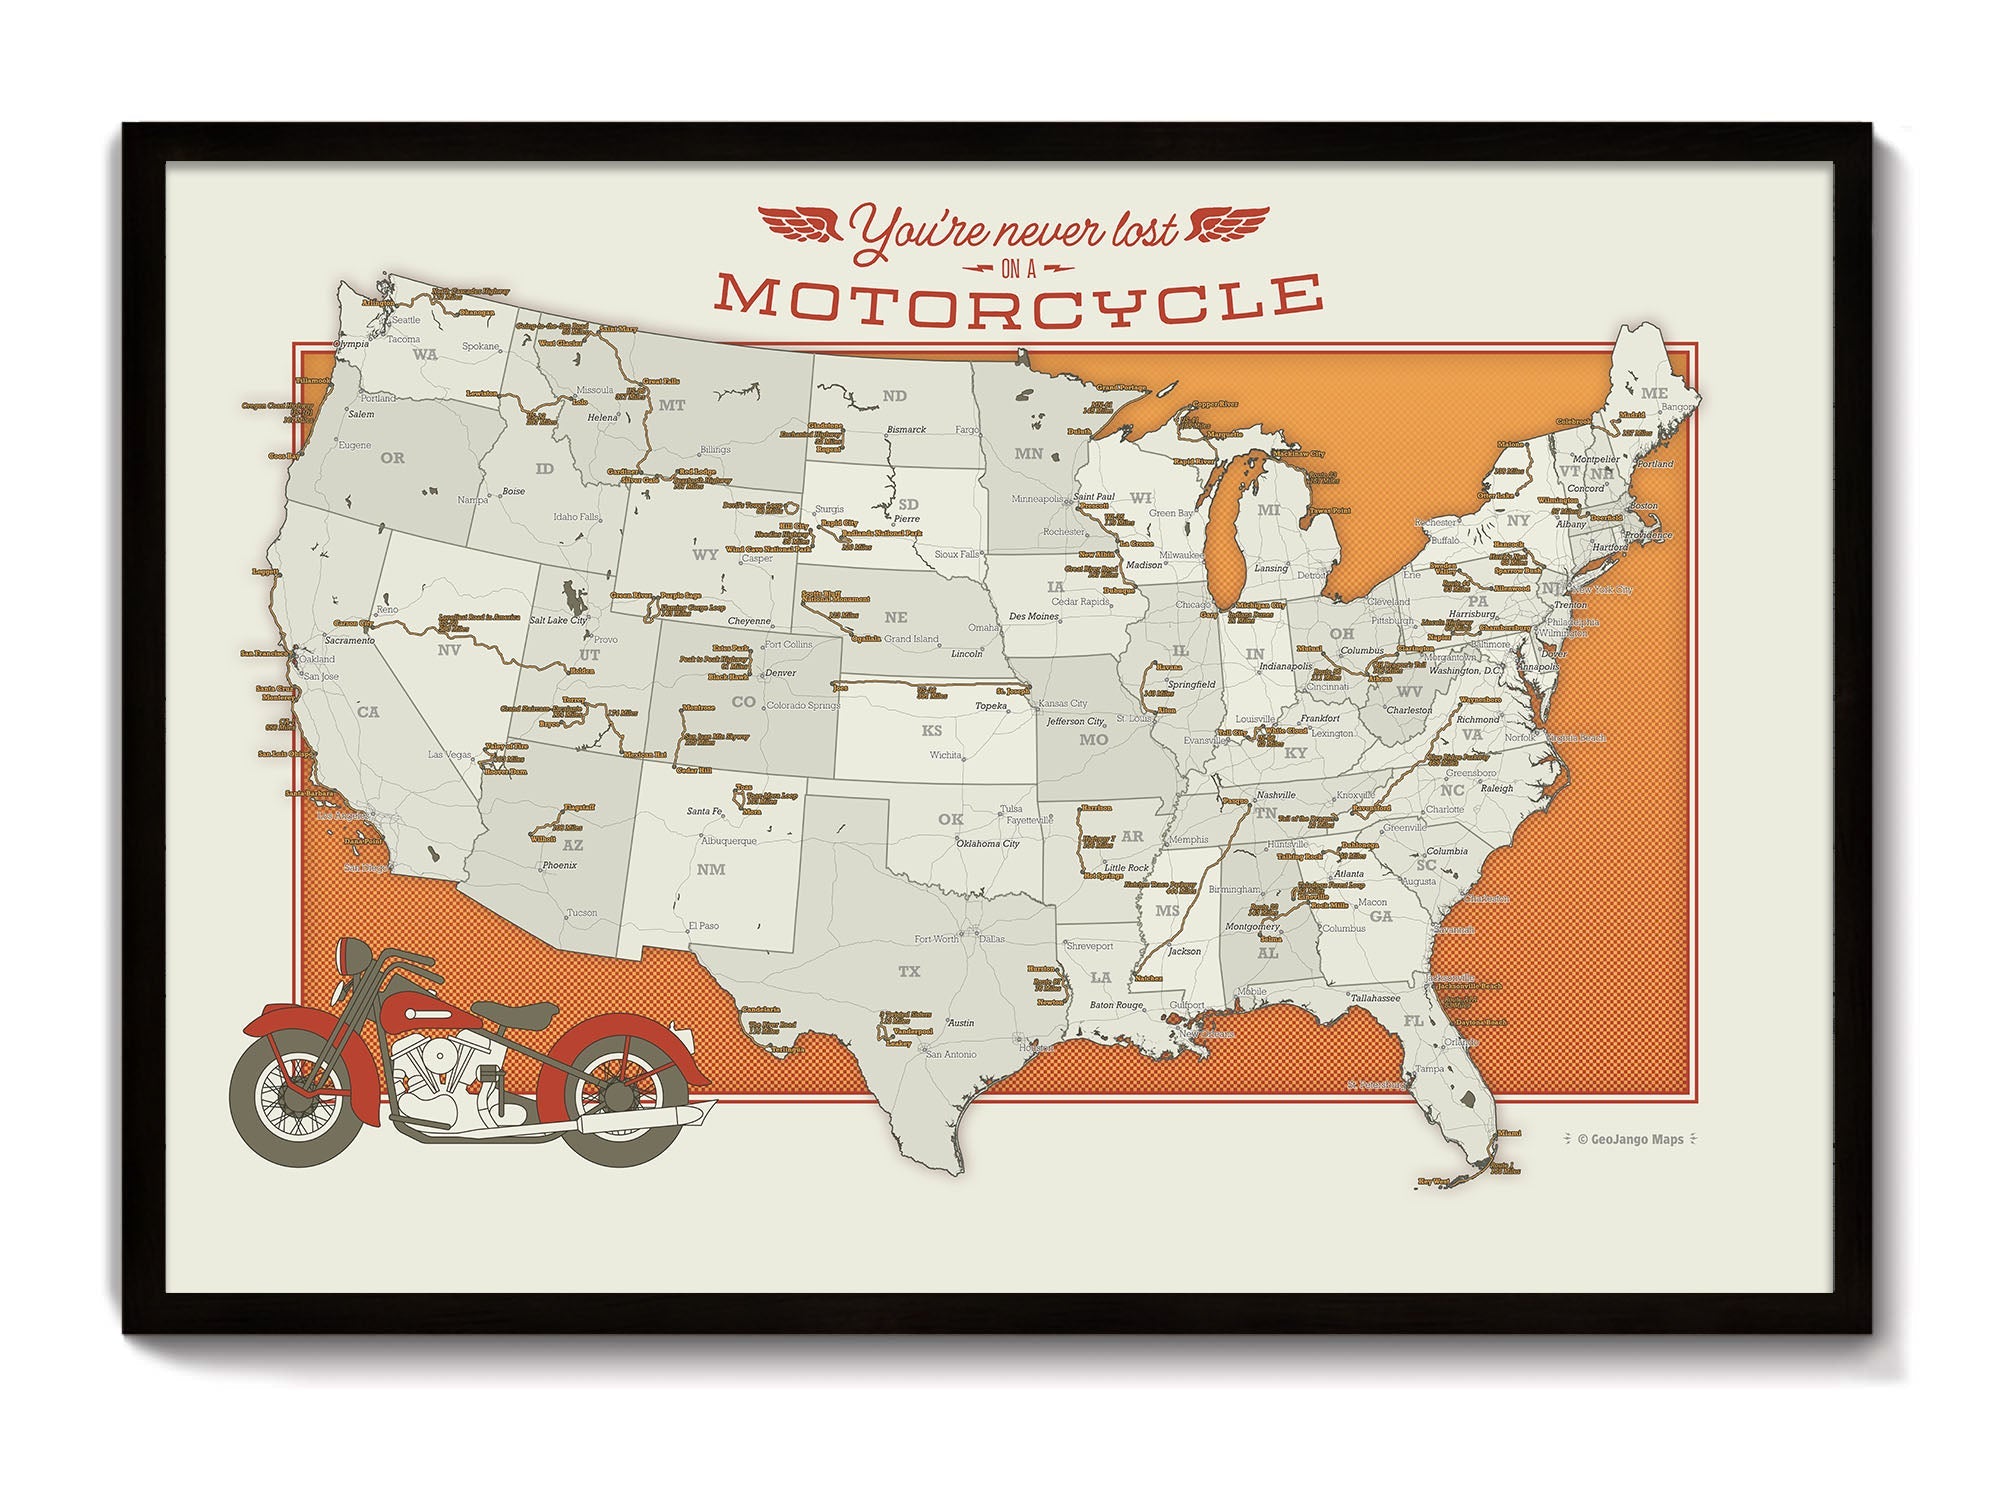 Motorcycle road trip map